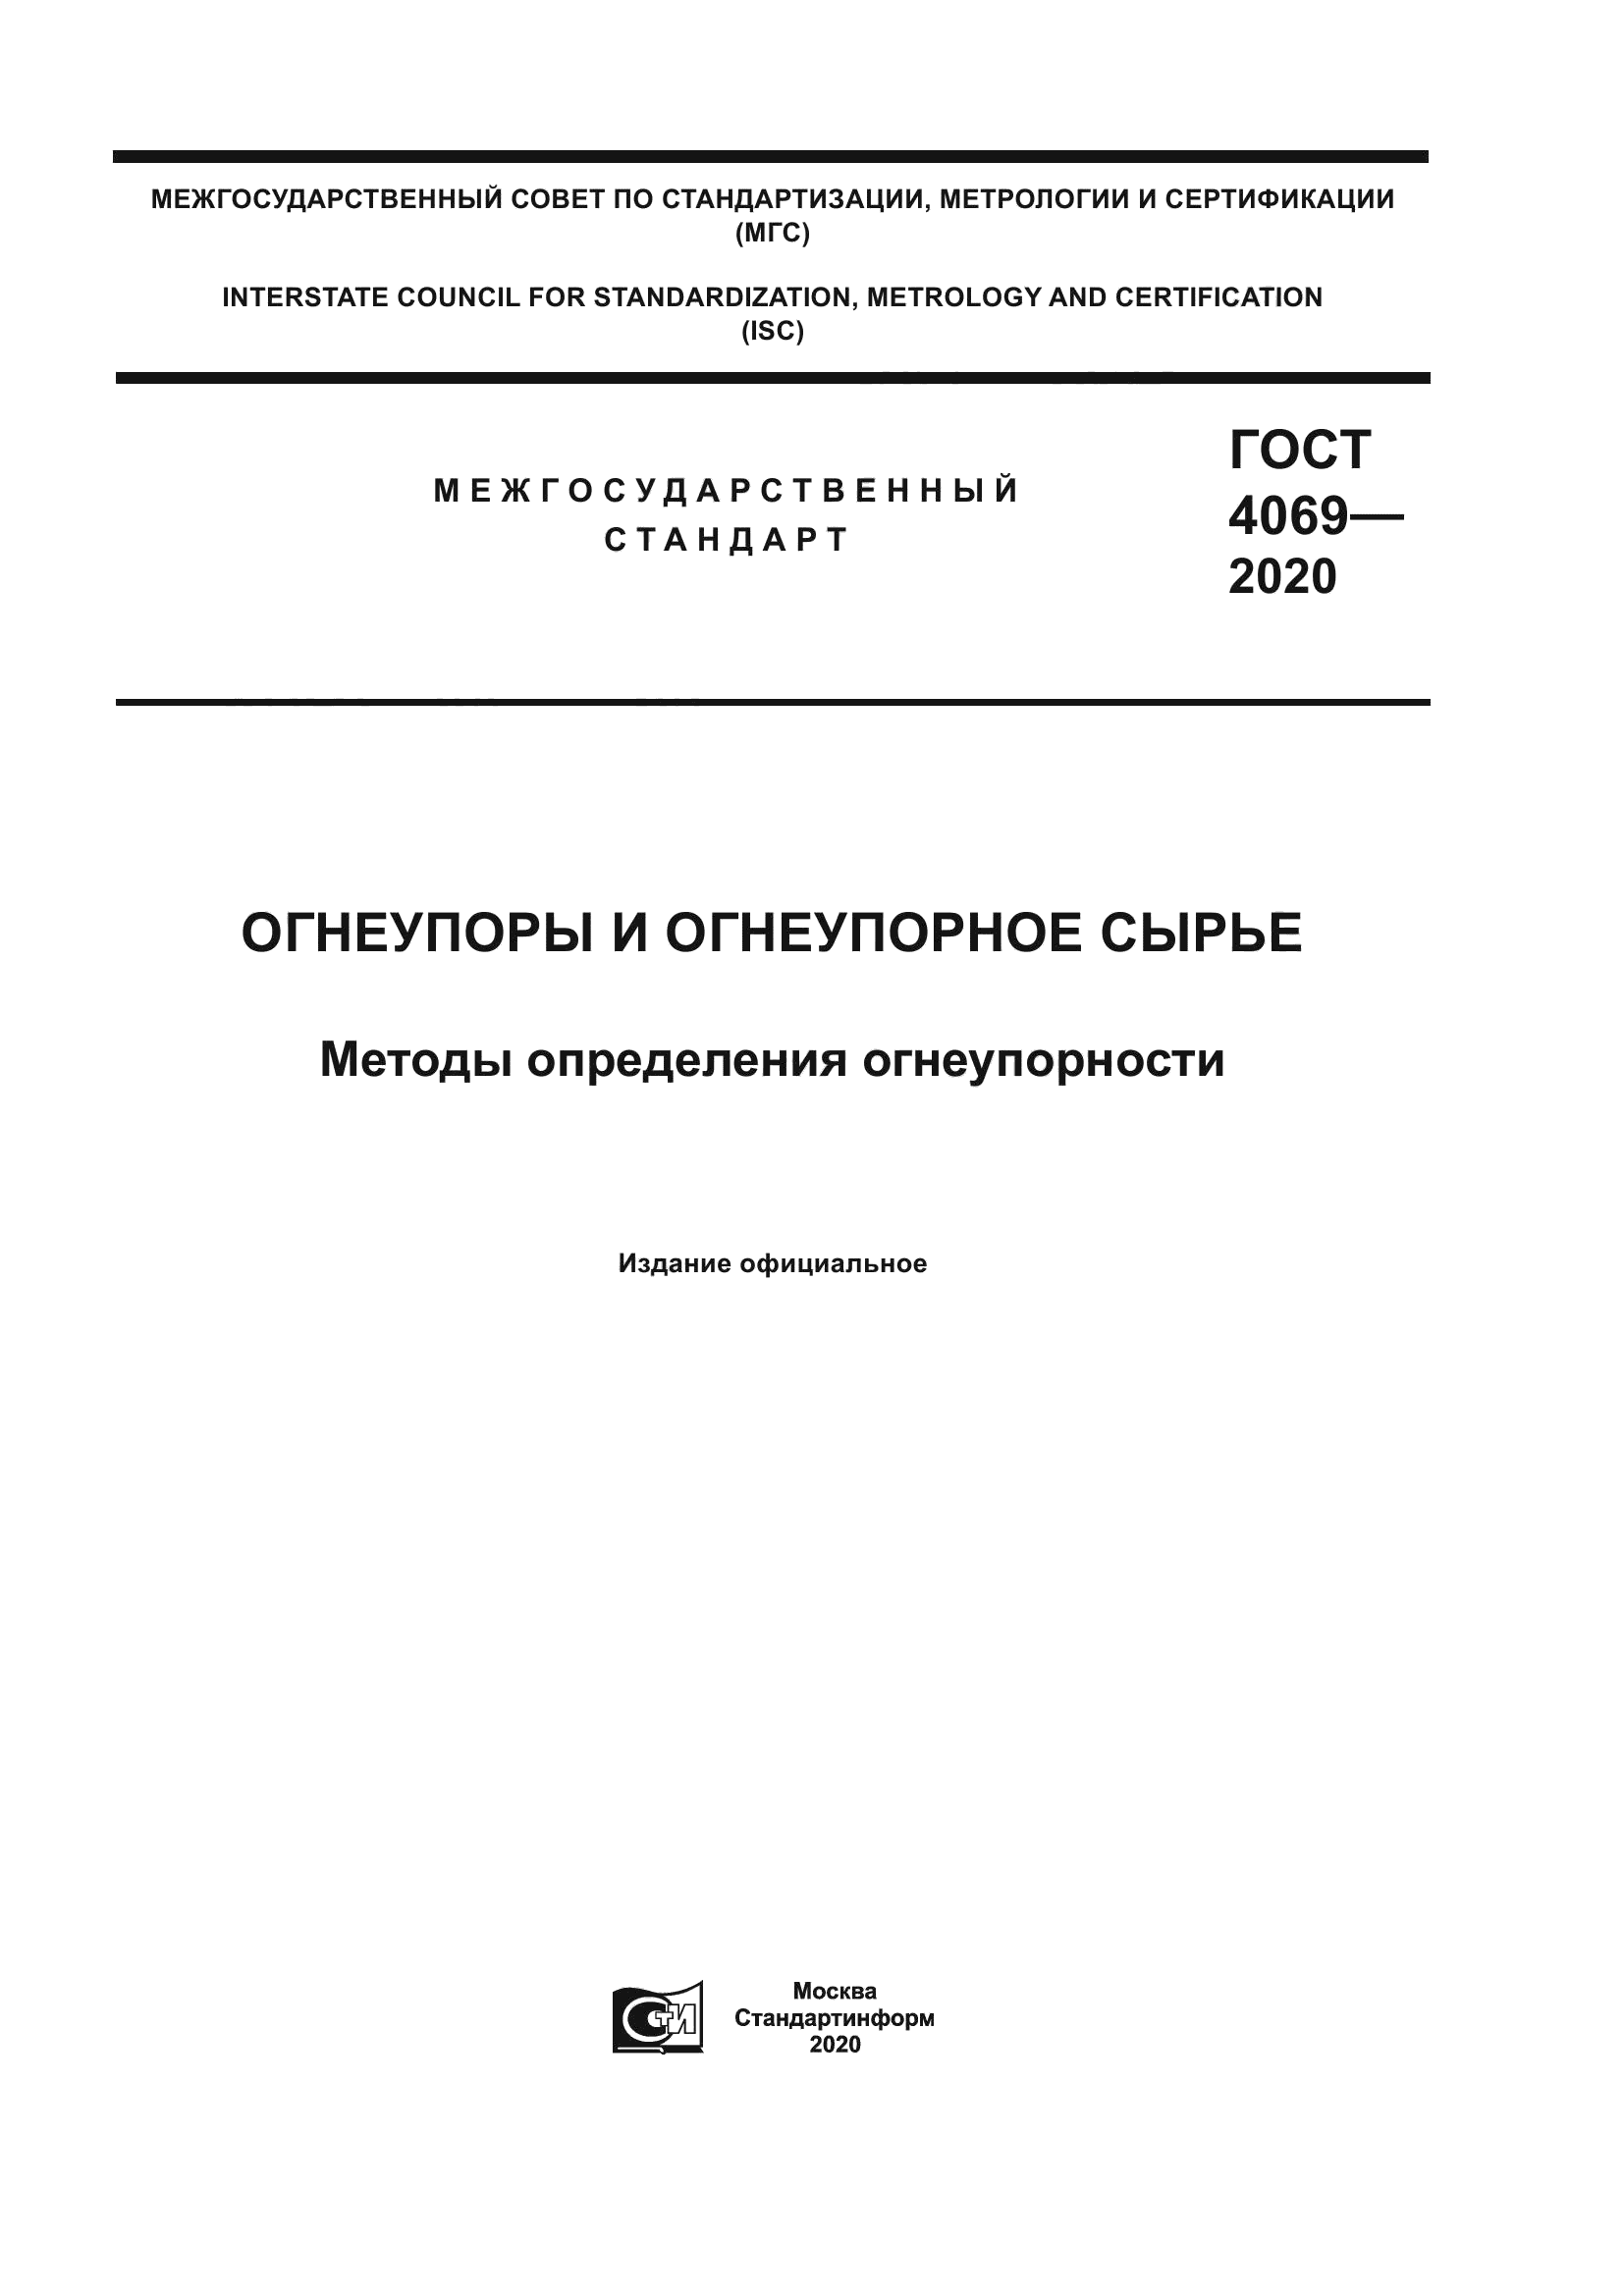 ГОСТ 4069-2020